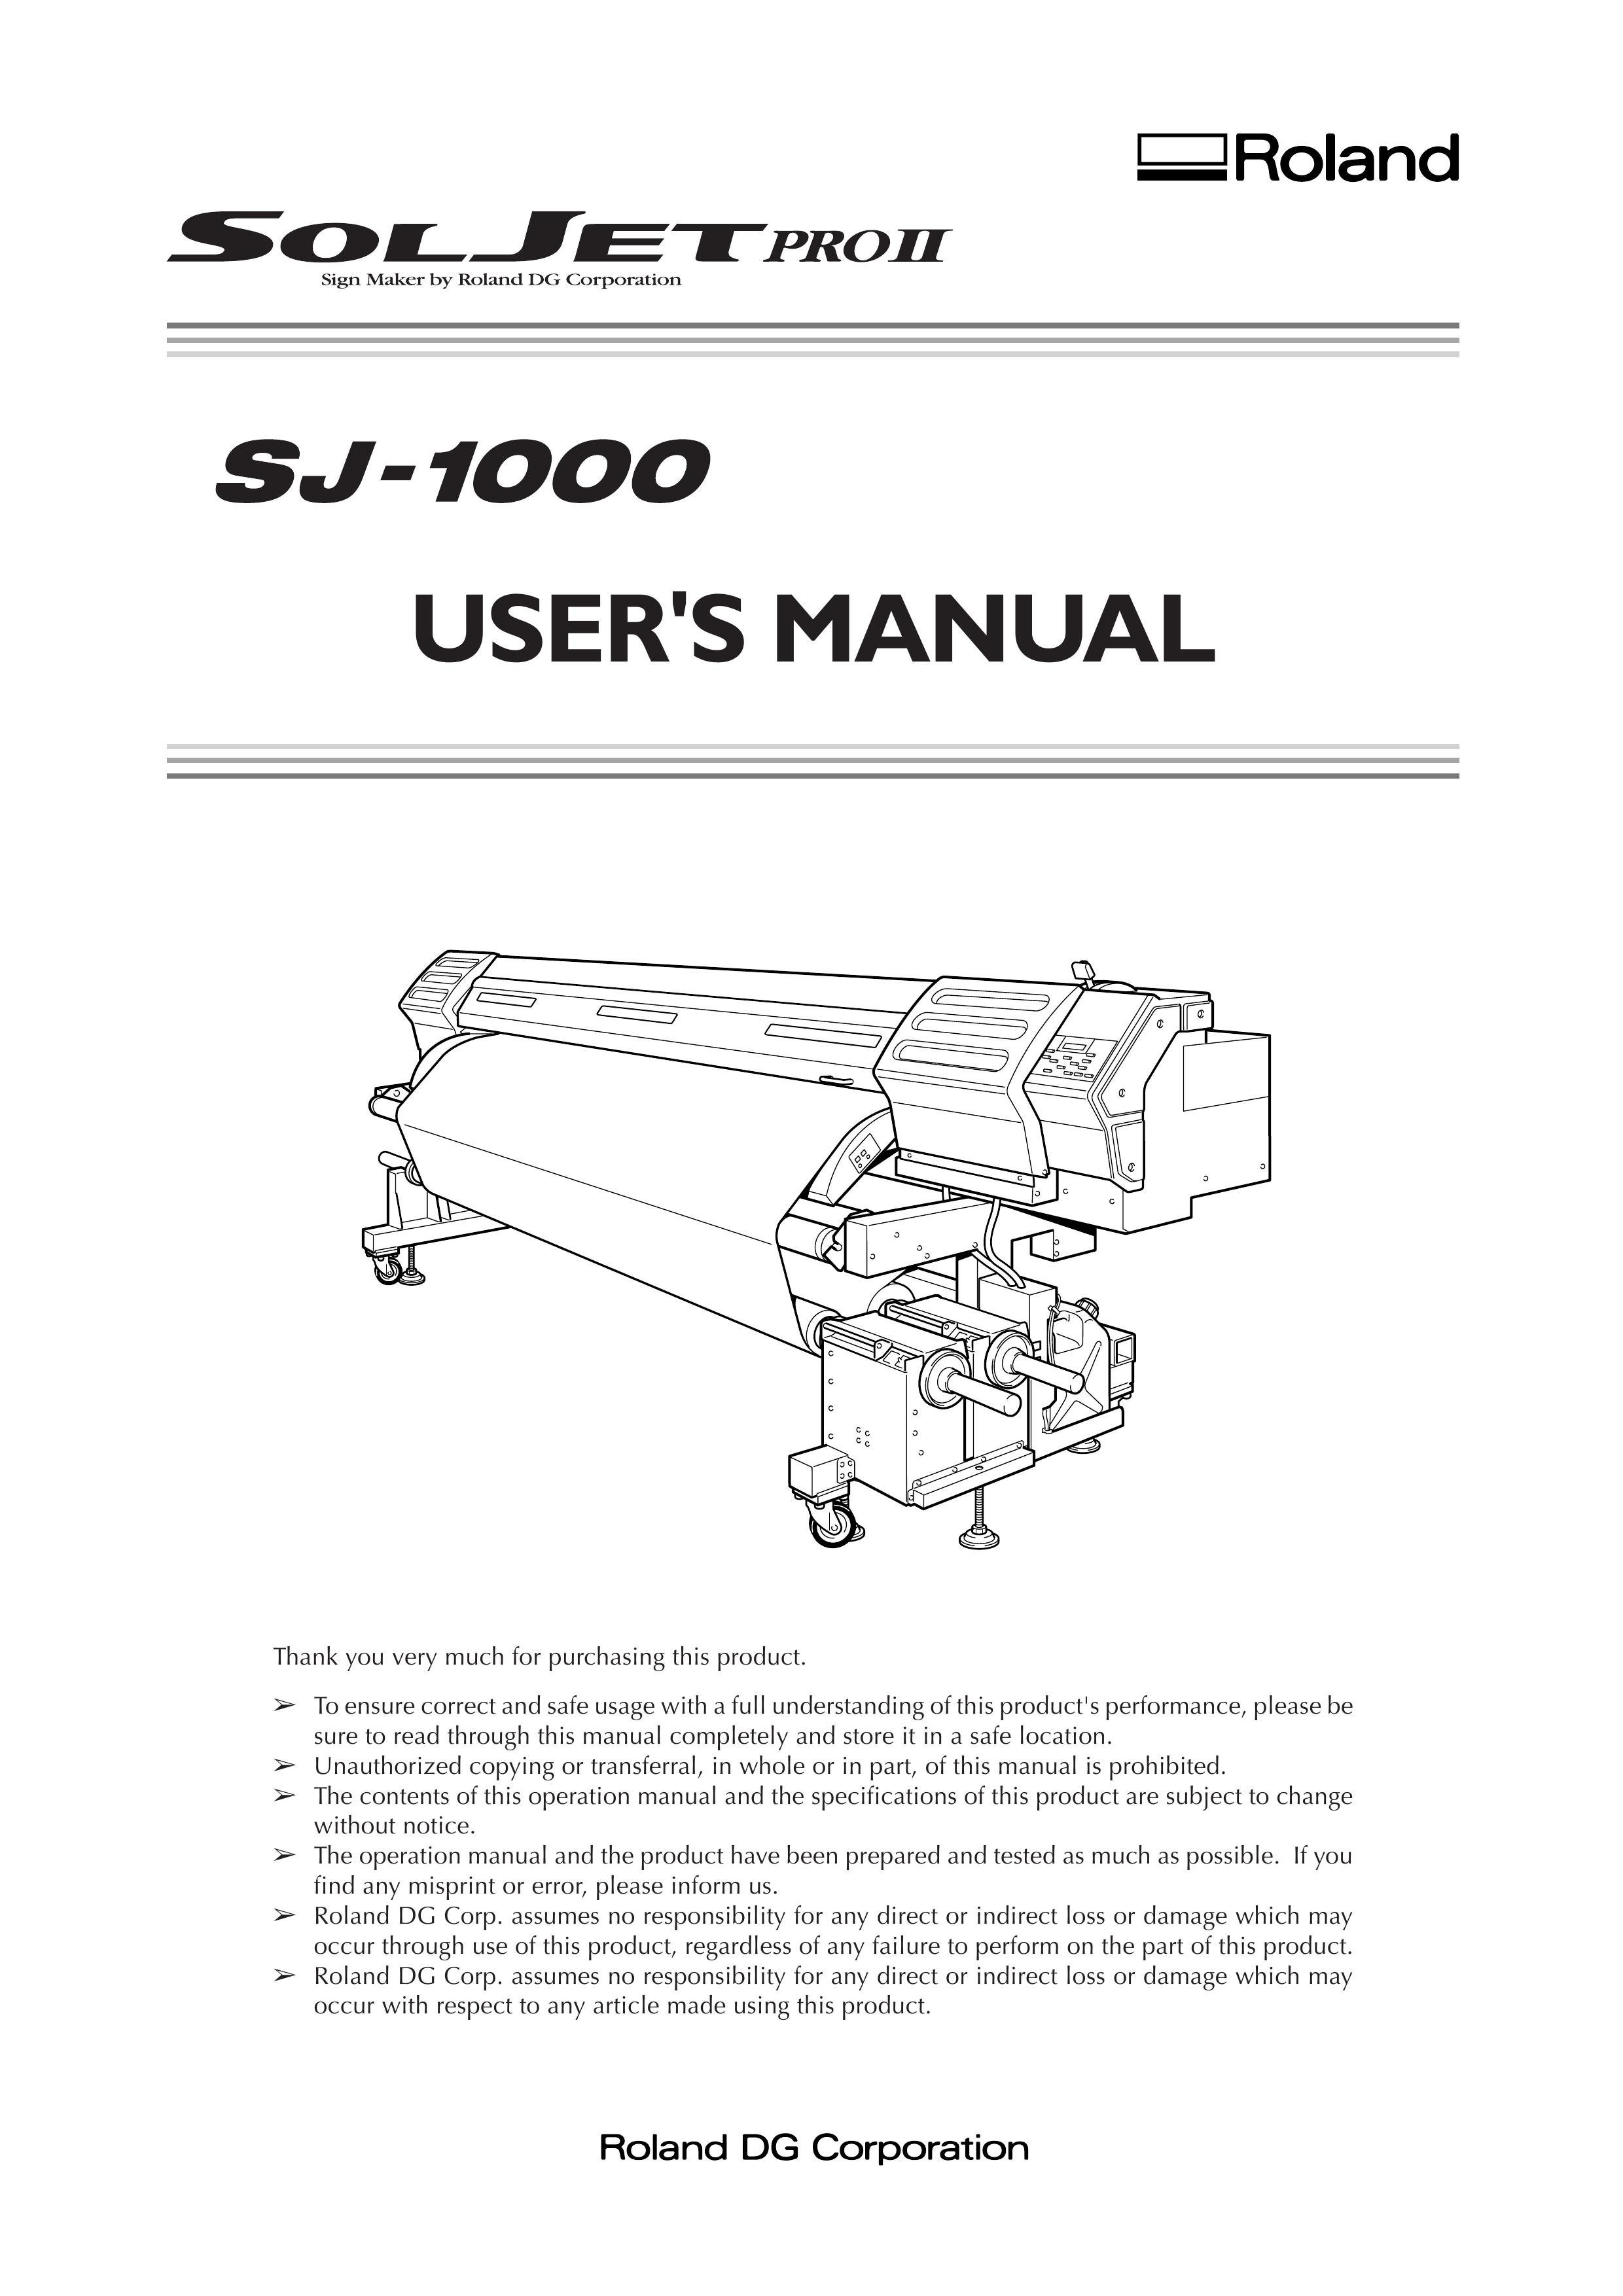 Roland SJ-1000 Jet Ski User Manual